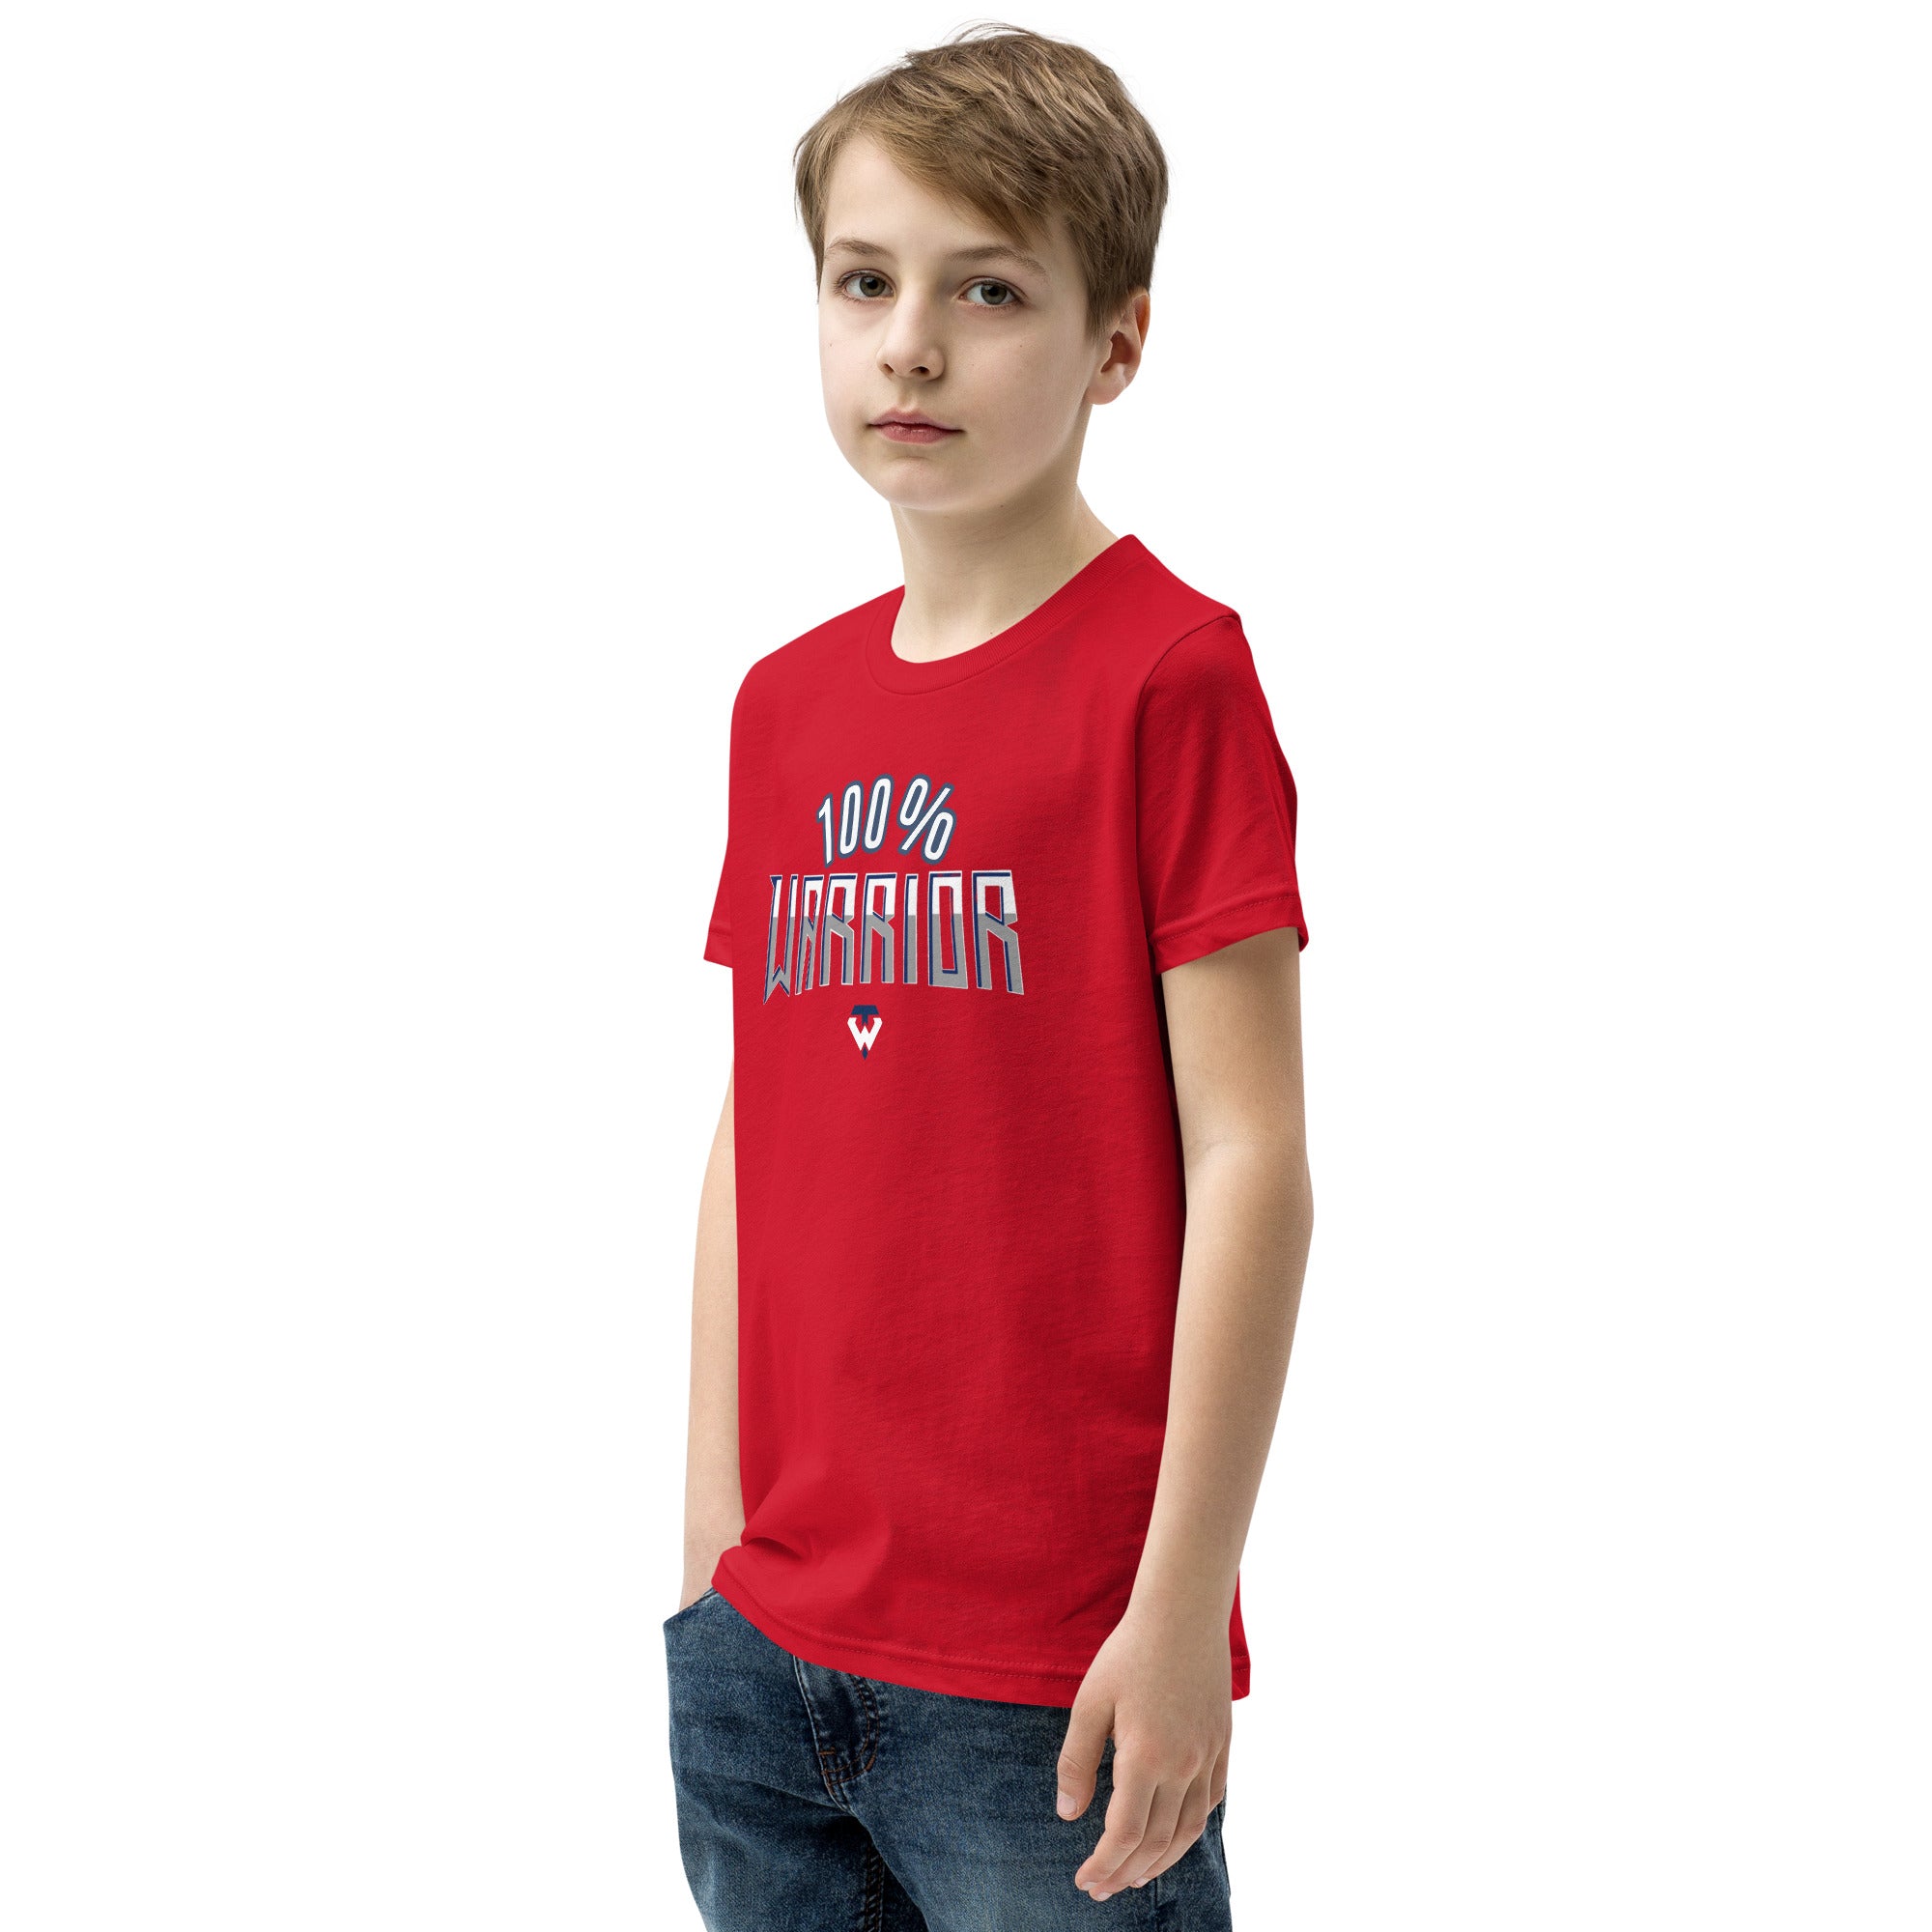 Tampa Warriors 100% Warrior Youth Short Sleeve T-Shirt